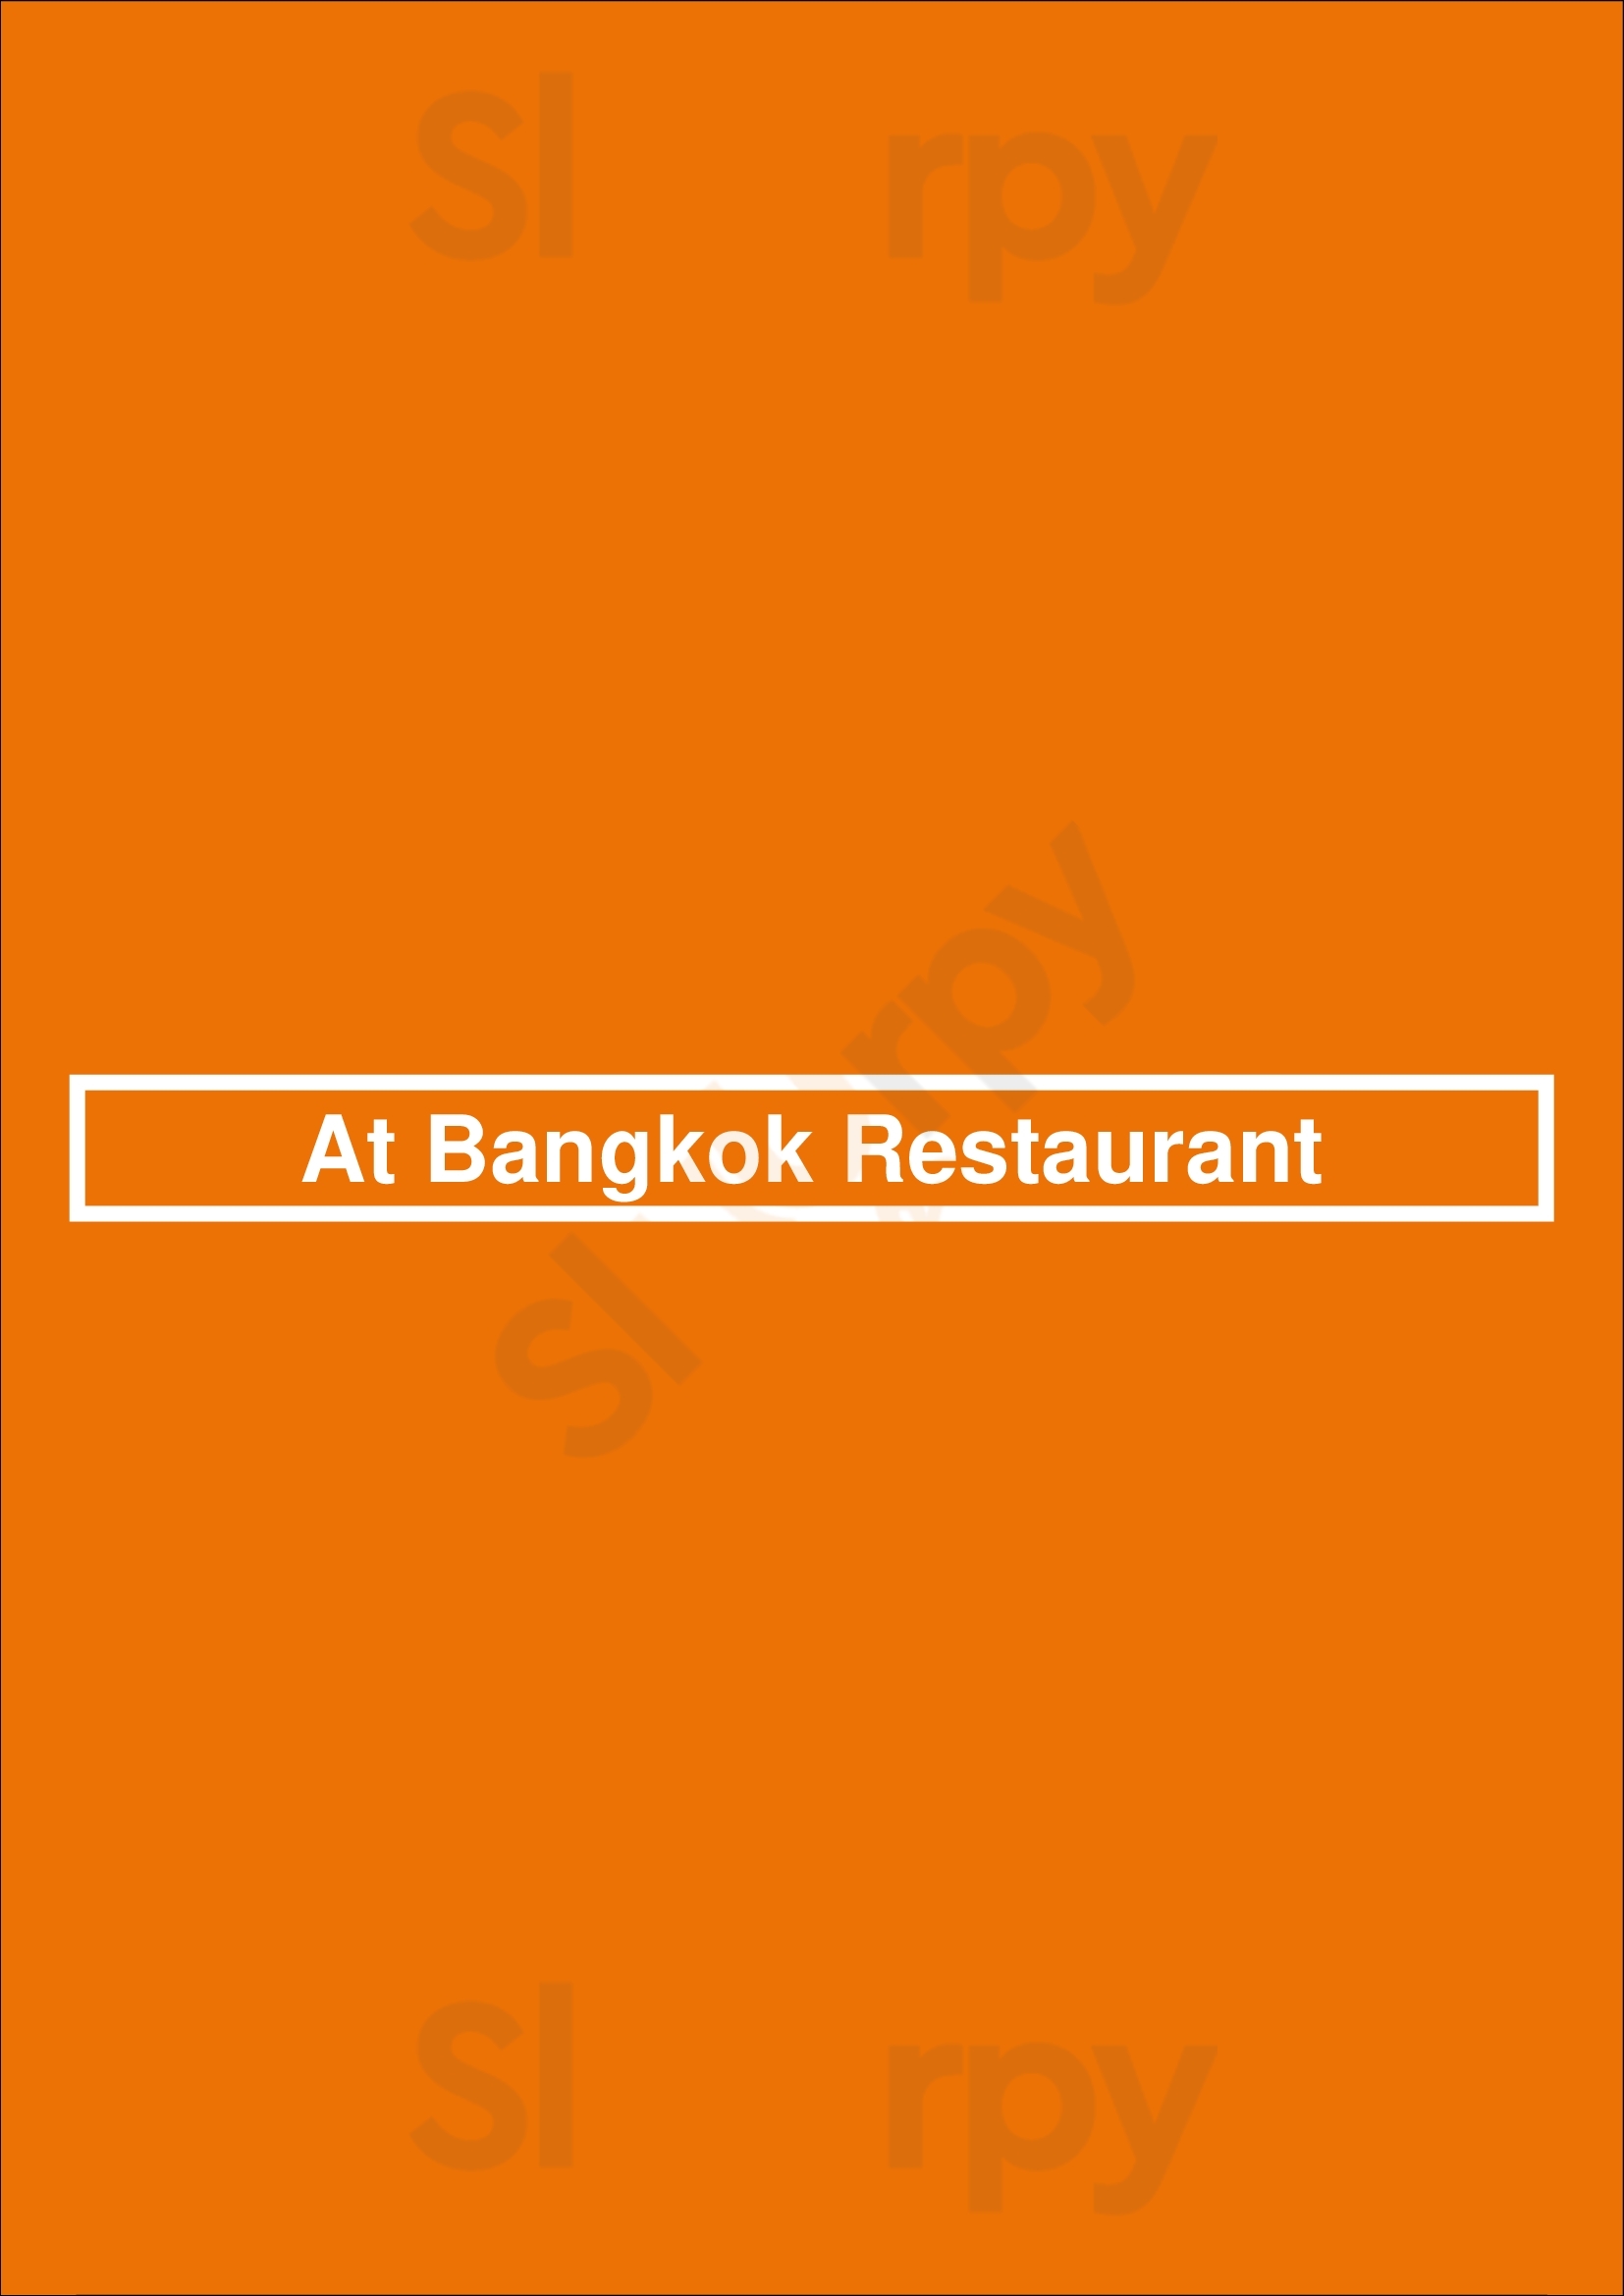 At Bangkok Restaurant Sydney Menu - 1